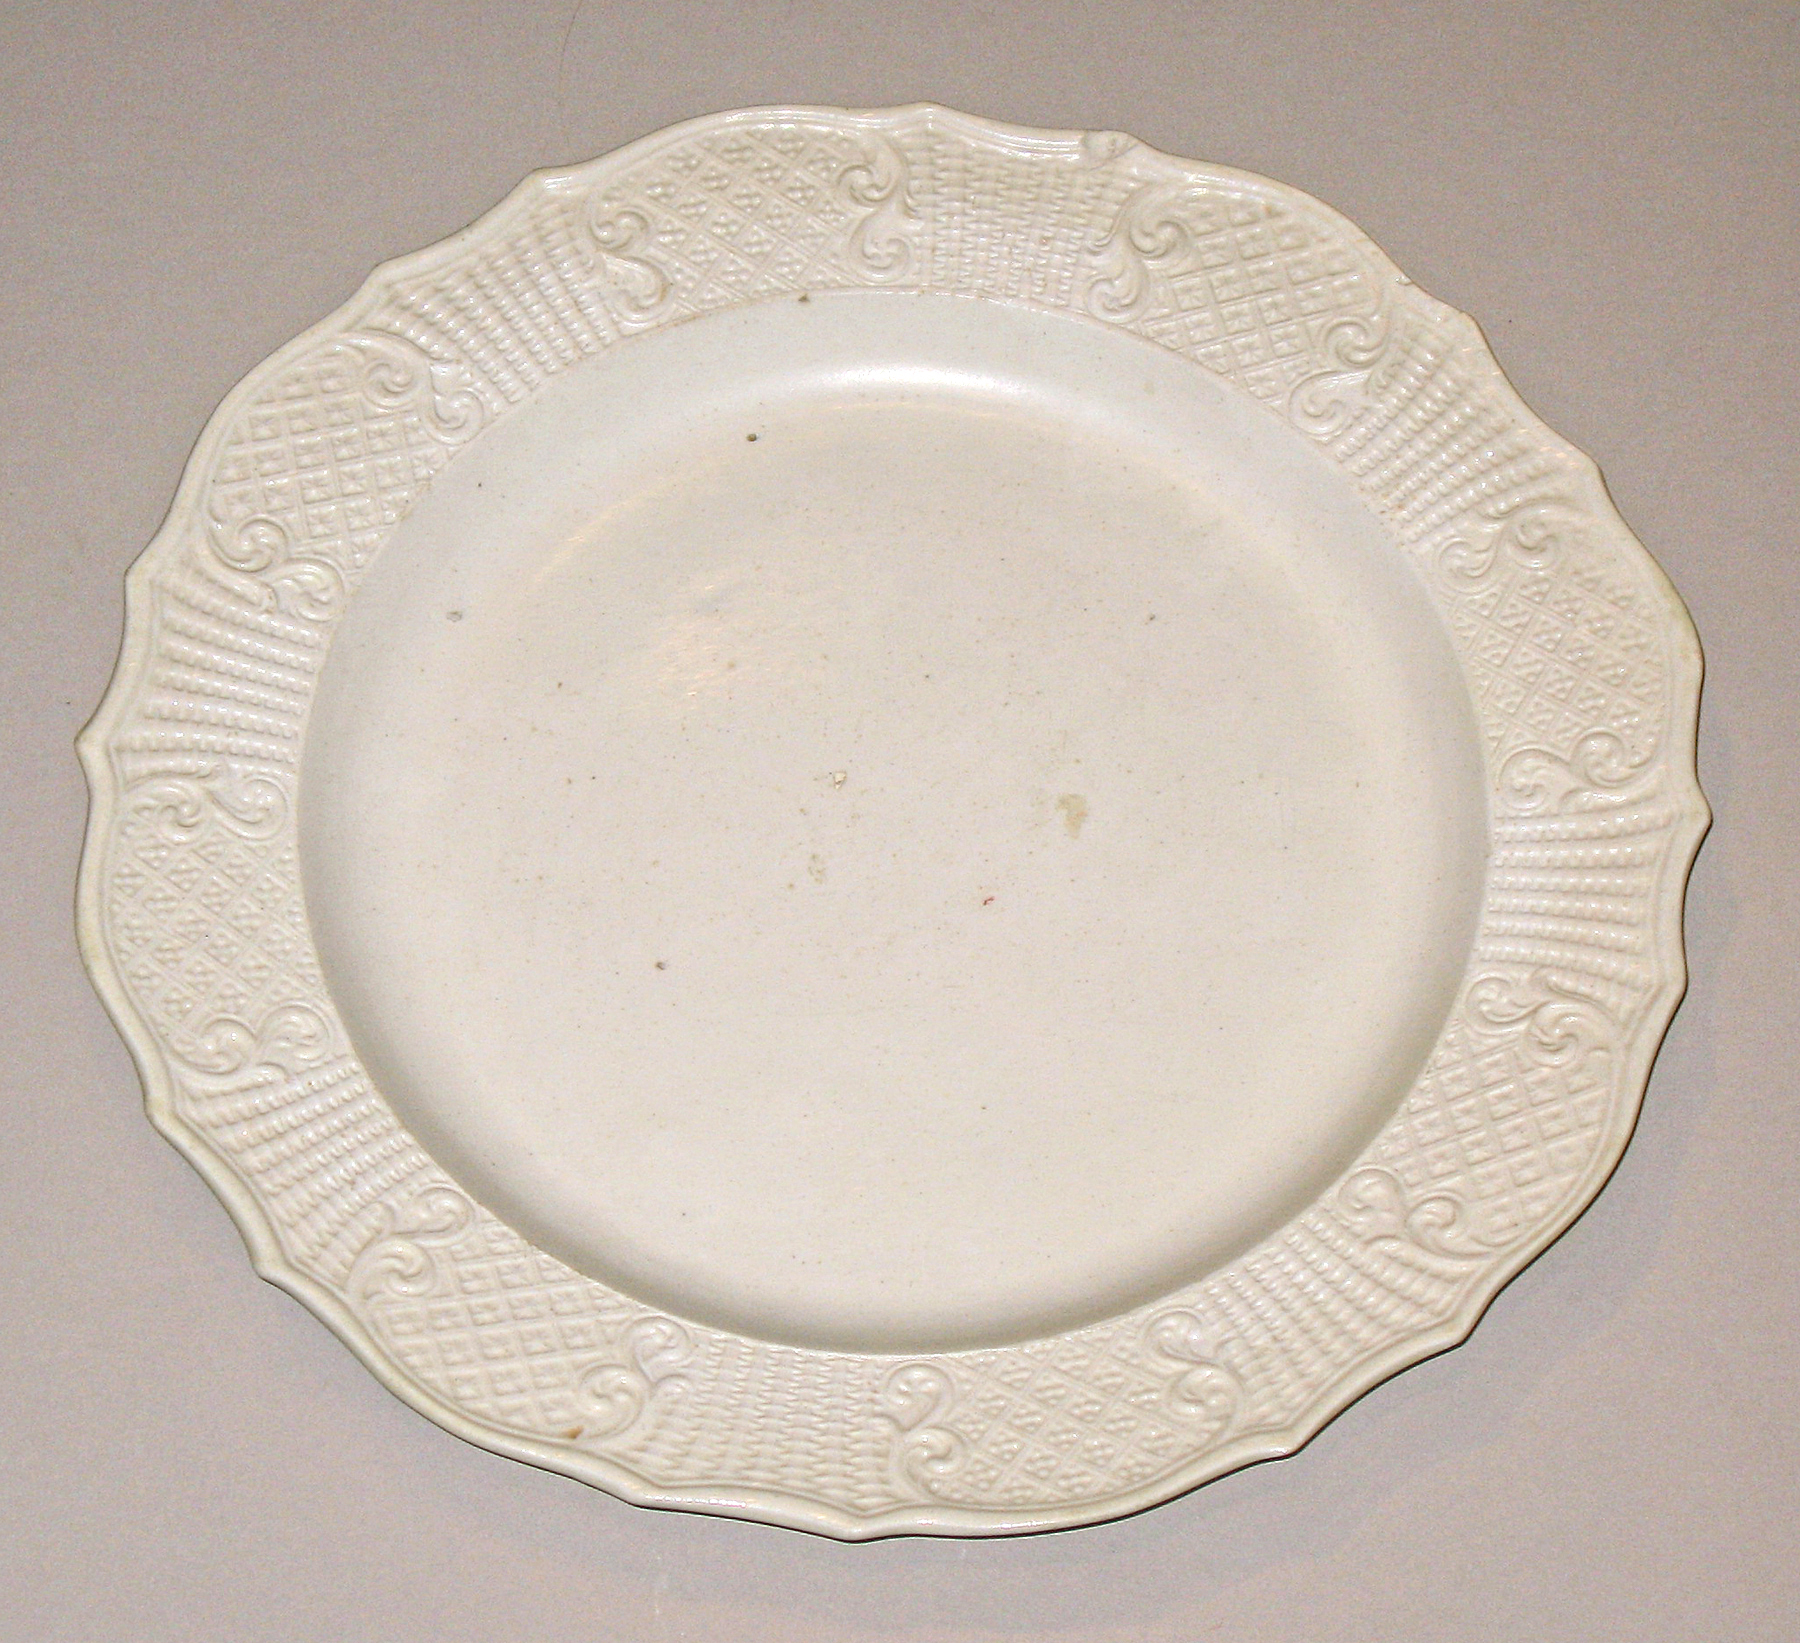 1958.0774 Plate